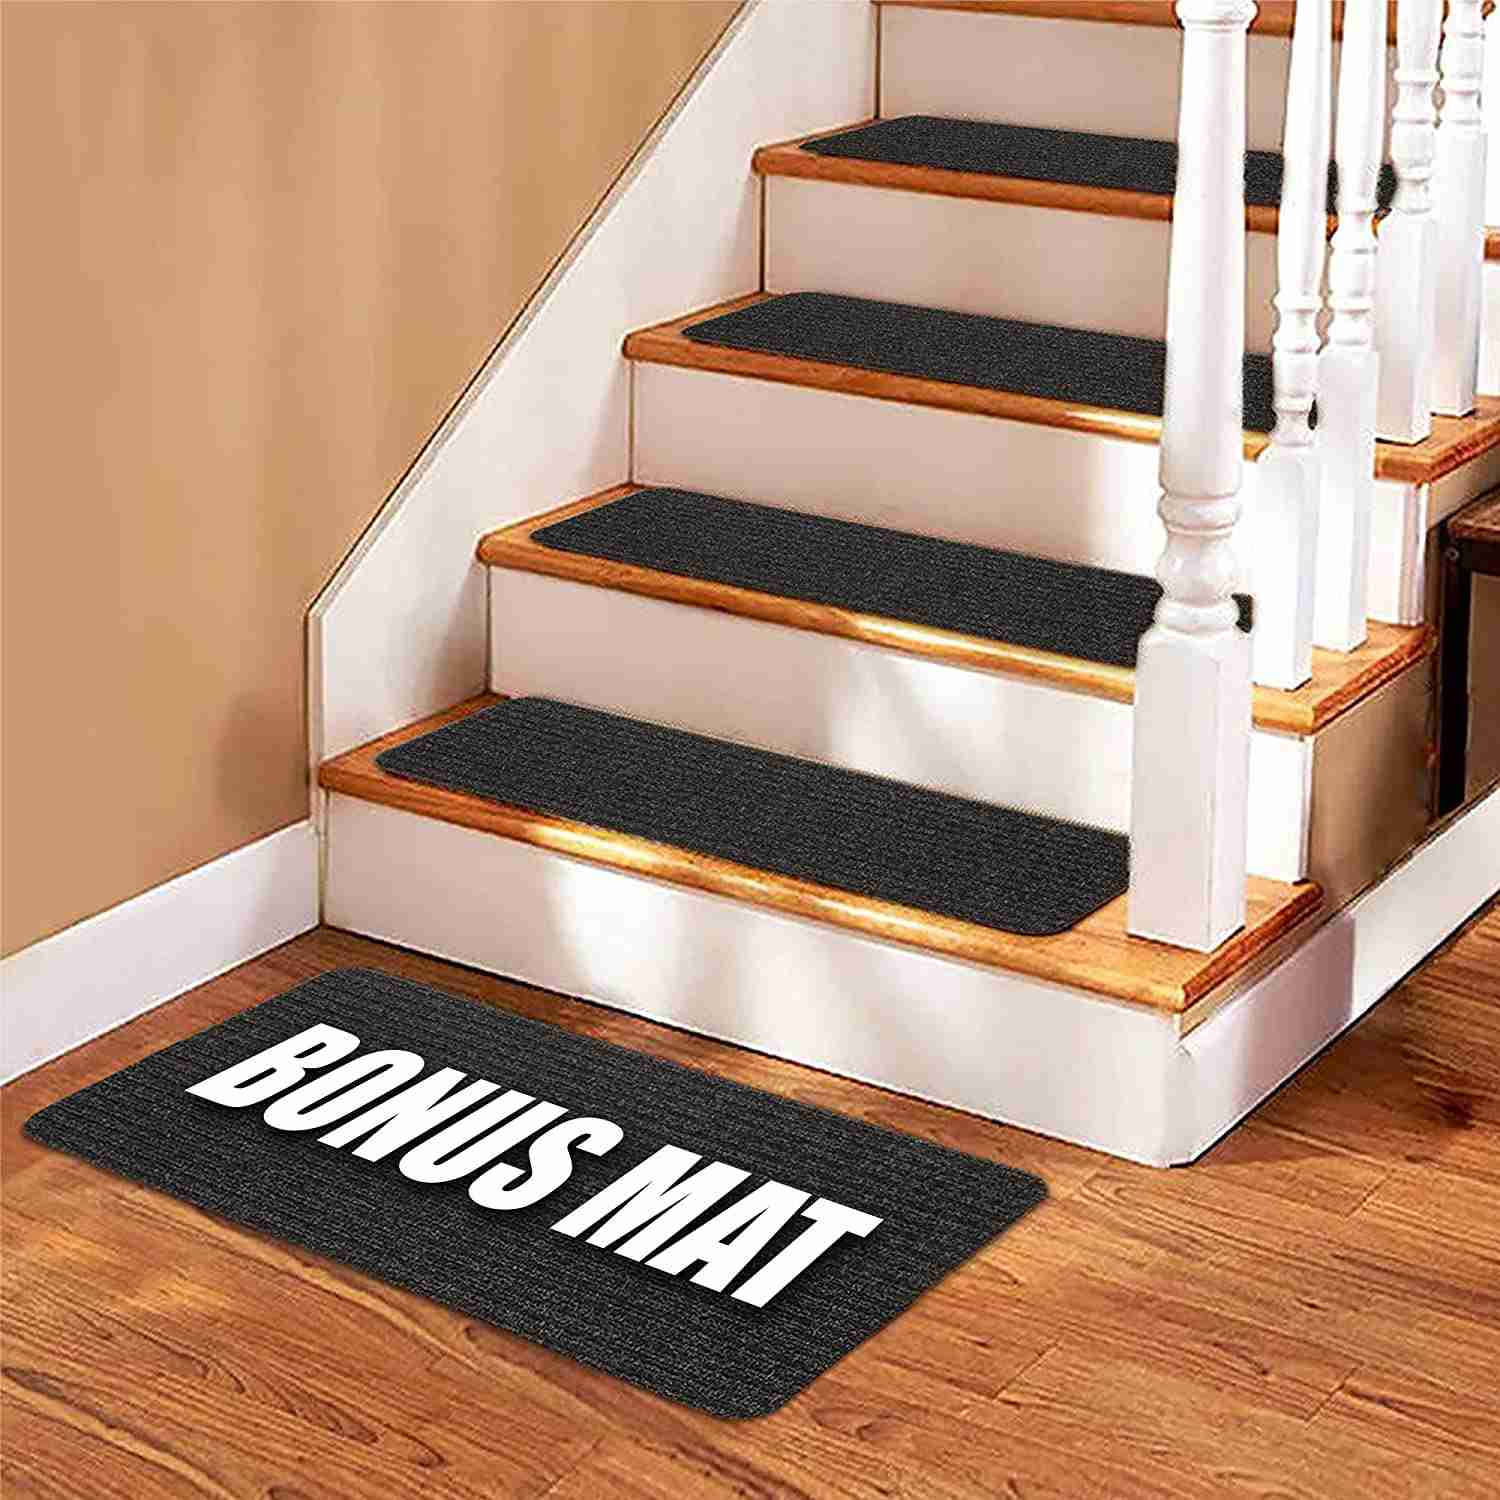 Stair-Treads-Carpet for cheap